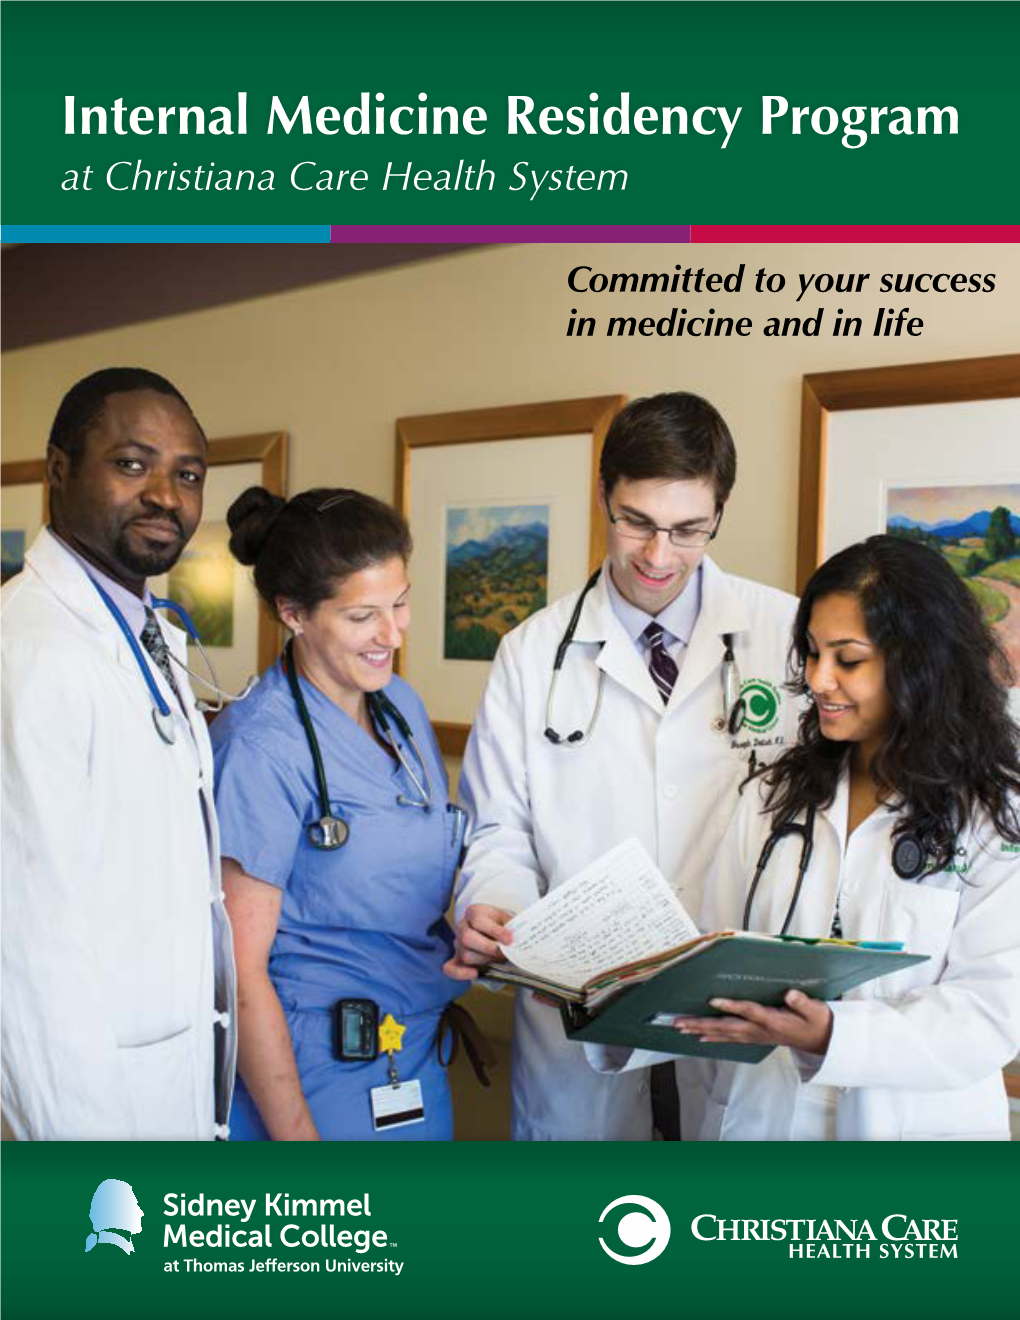 Internal Medicine Residency Program at Christiana Care Health System